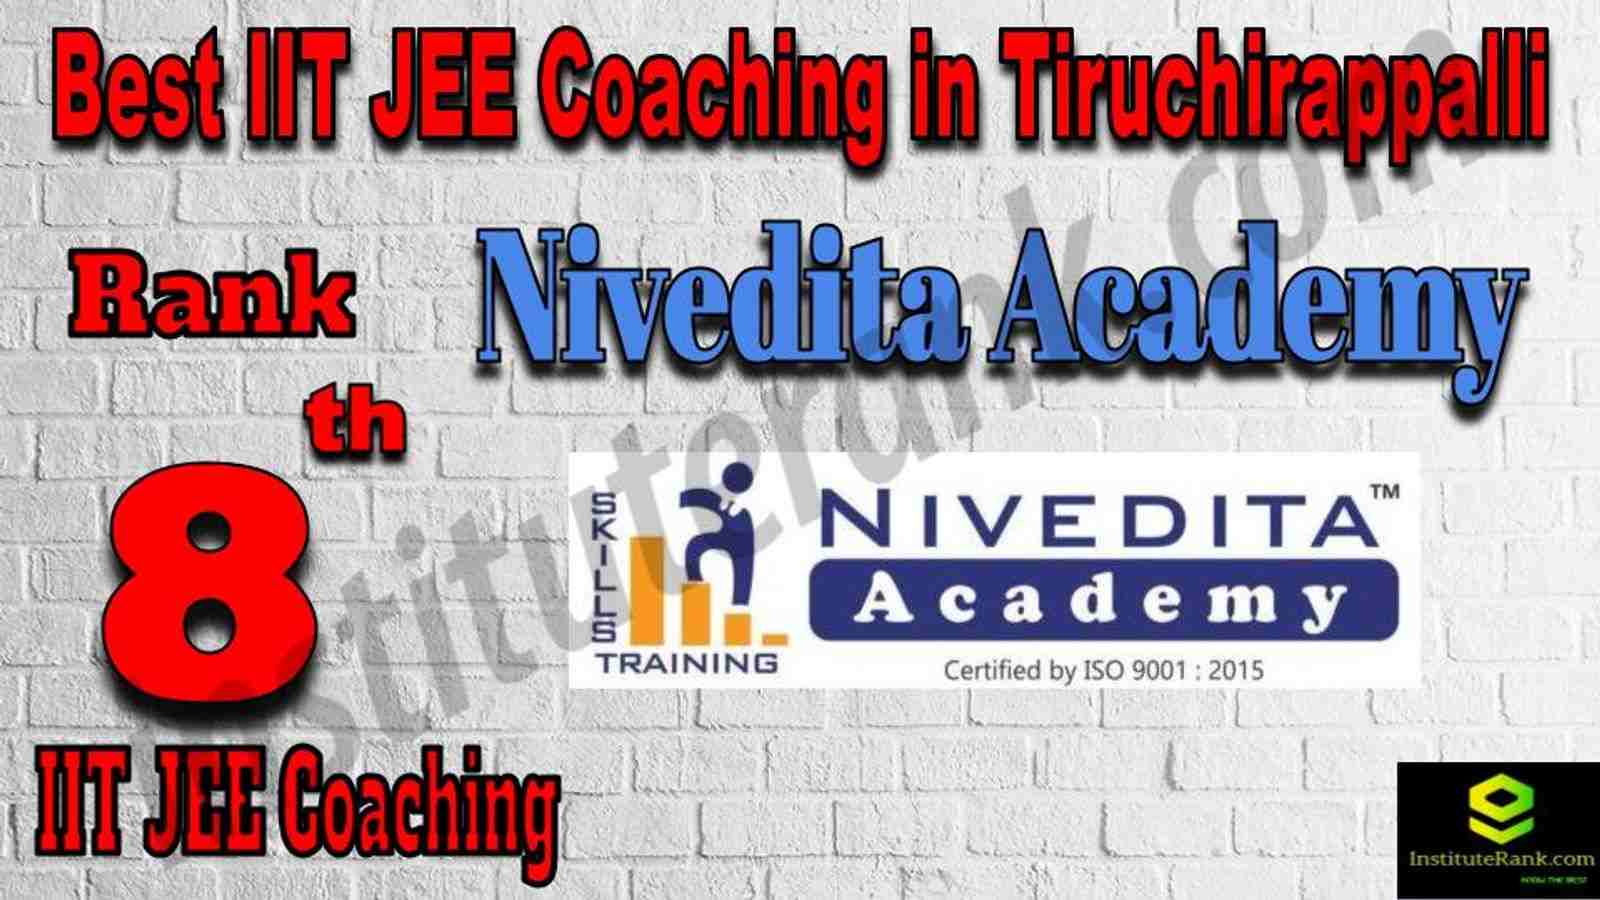 8th Best IIT JEE Coaching in Tiruchirappalli